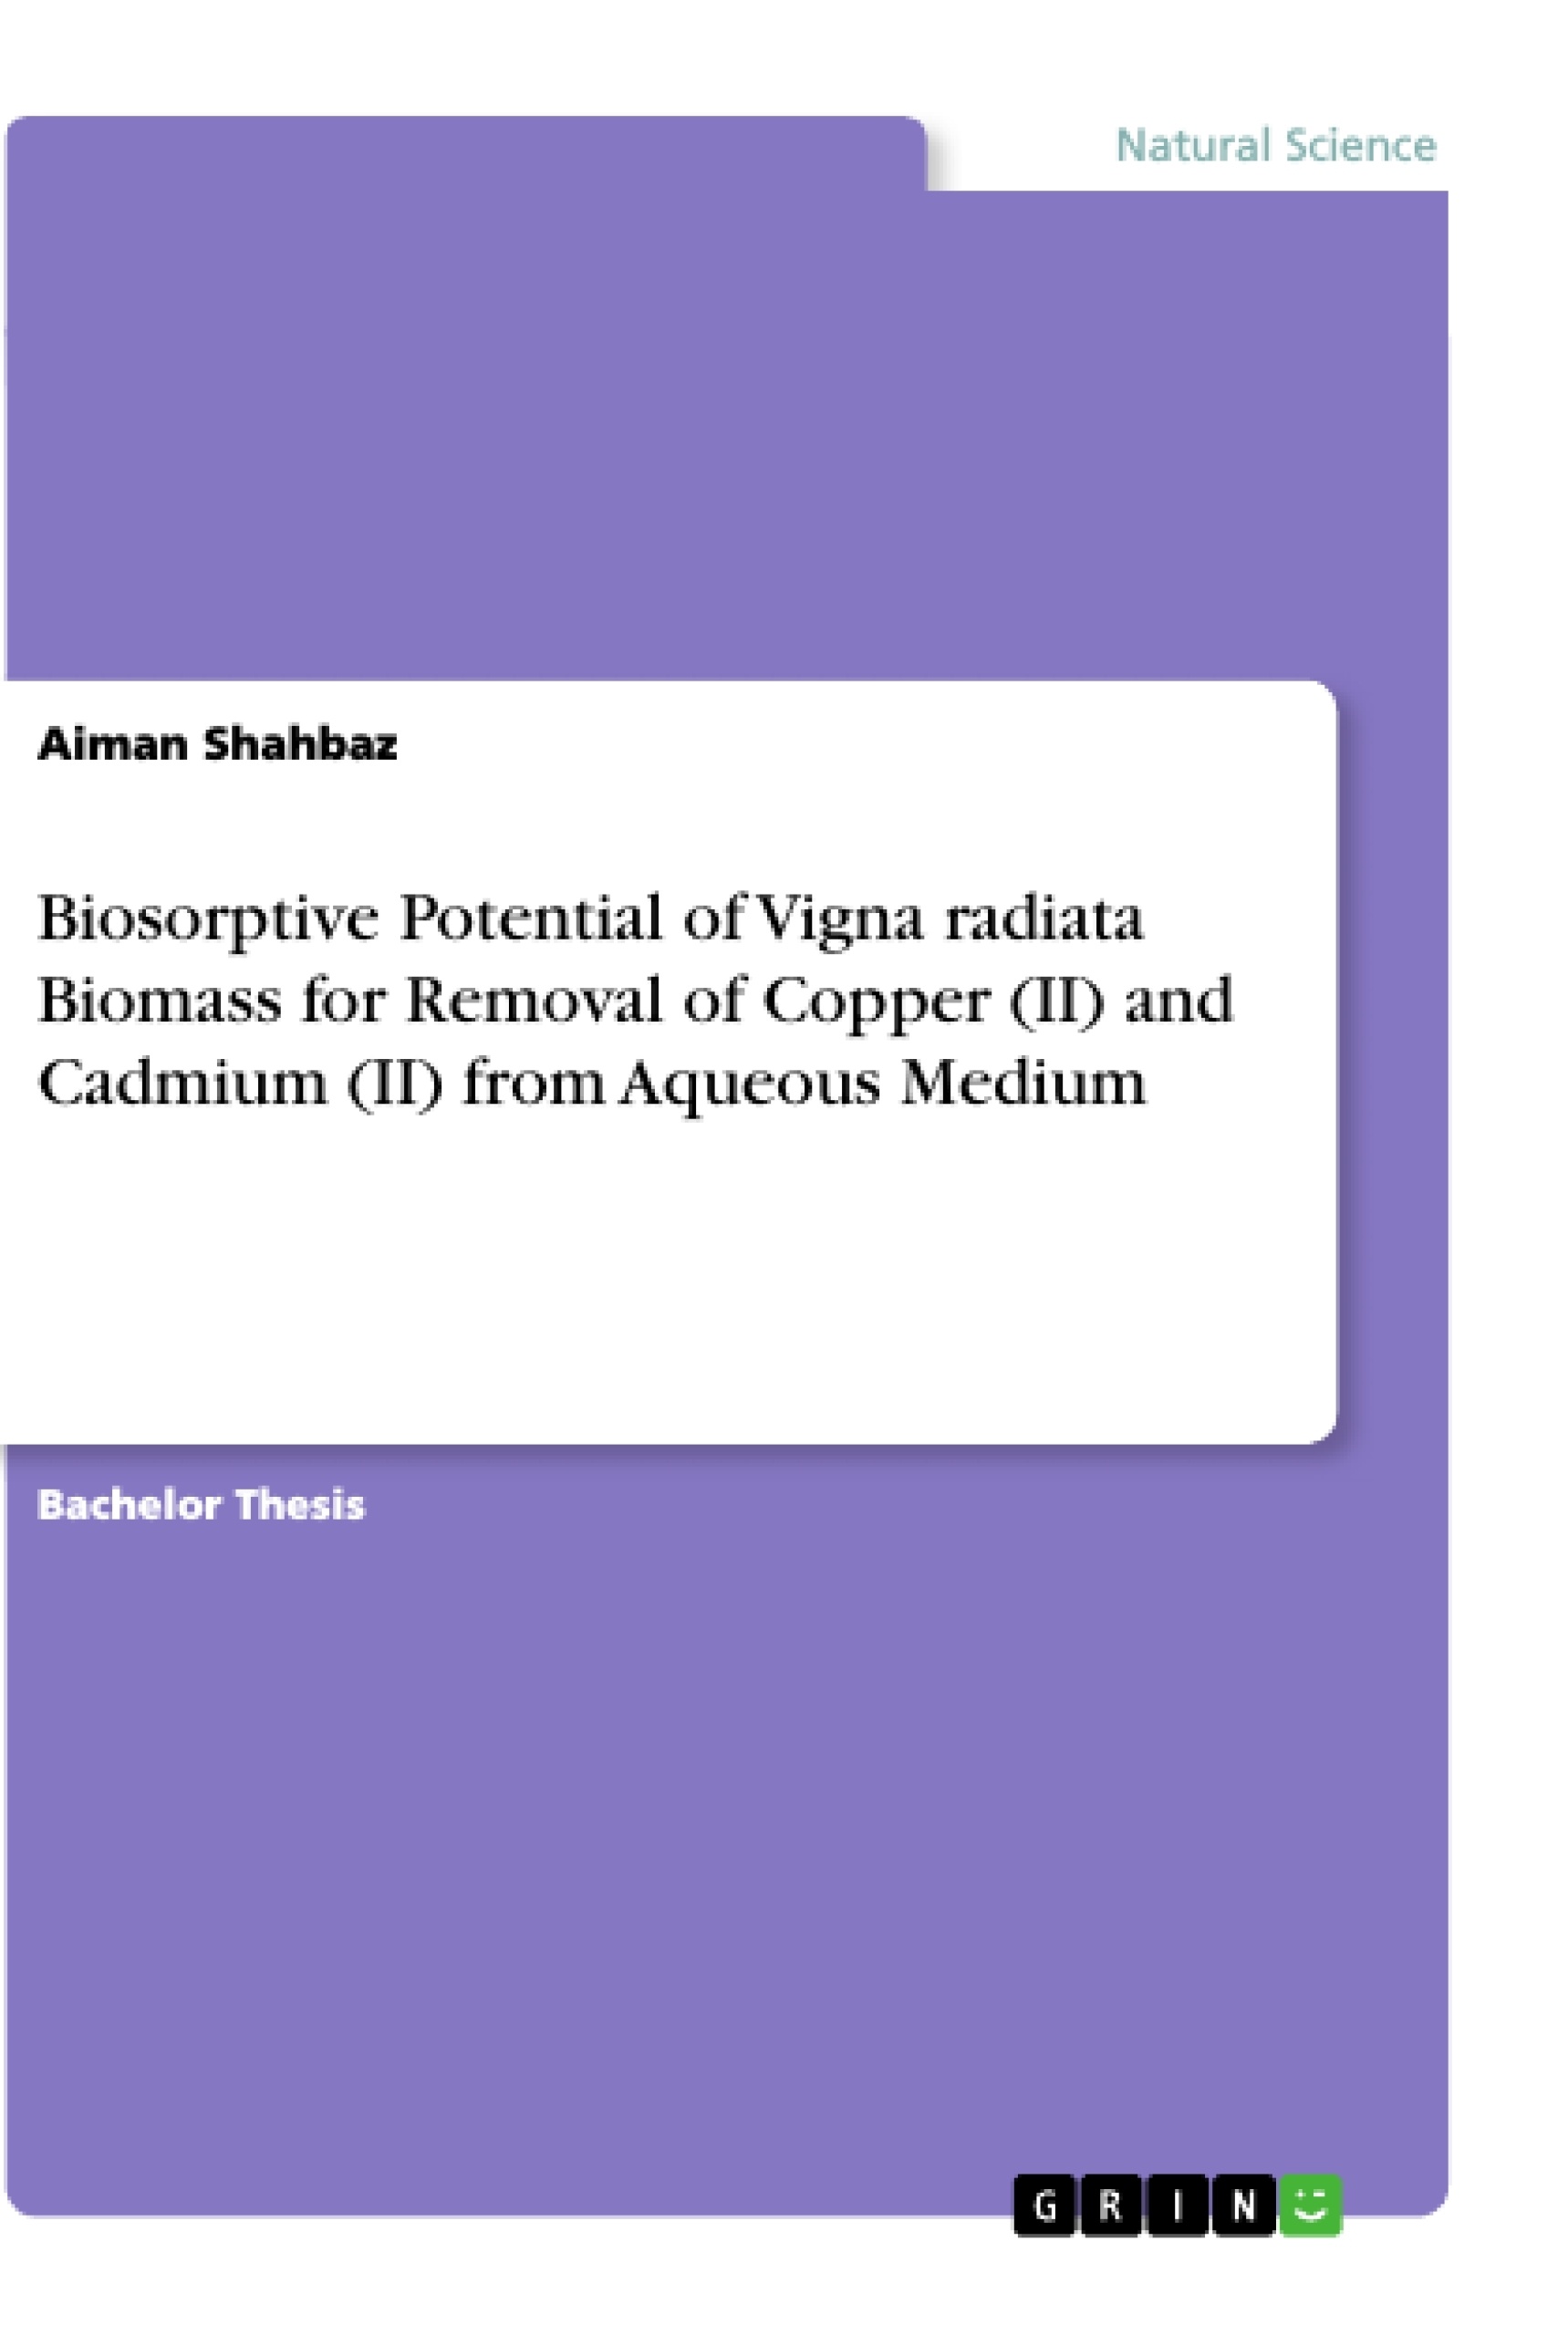 Title: Biosorptive Potential of Vigna radiata Biomass for Removal of Copper (II) and Cadmium (II) from Aqueous Medium